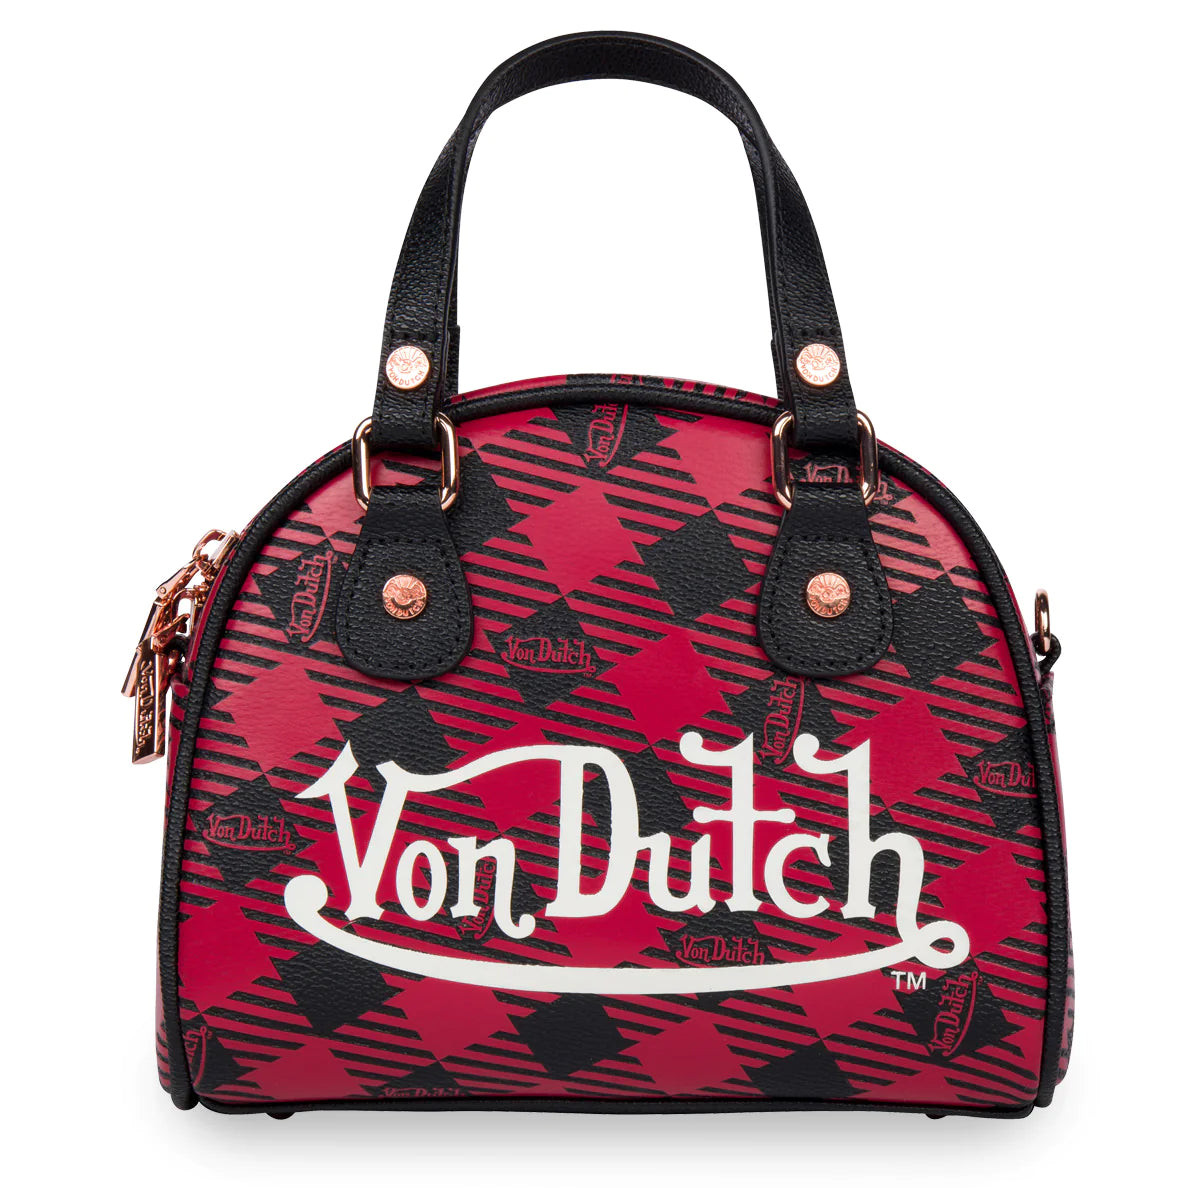 Von Dutch Limited Red and Black Plaid Bowling Bag